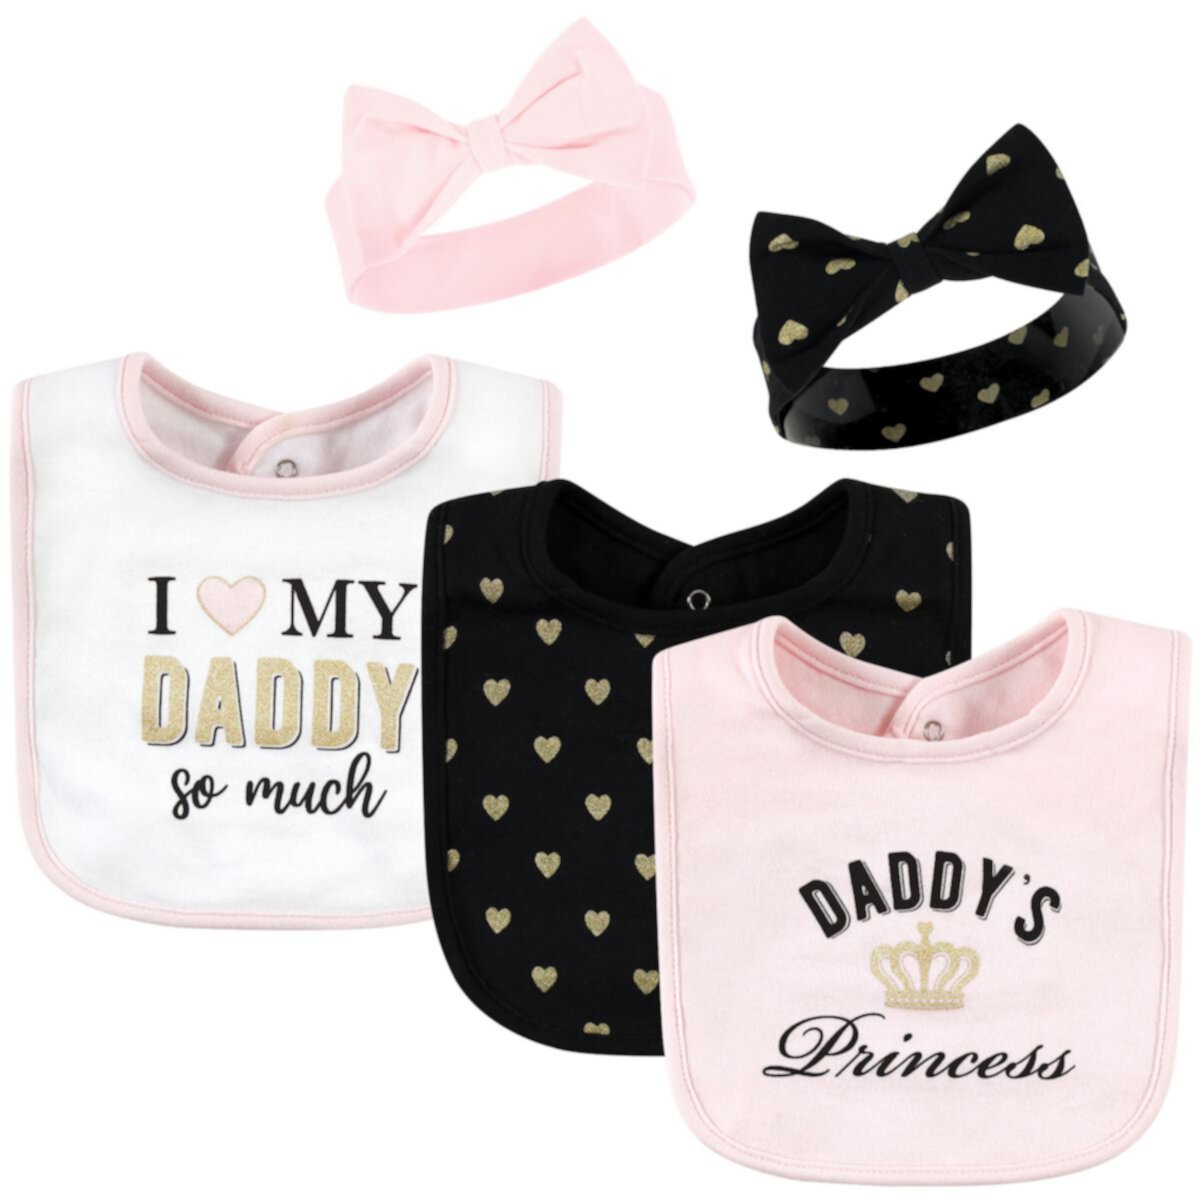 Hudson Baby Infant Girl Cotton Bib and Headband or Caps Set, Daddys Princess, One Size Hudson Baby